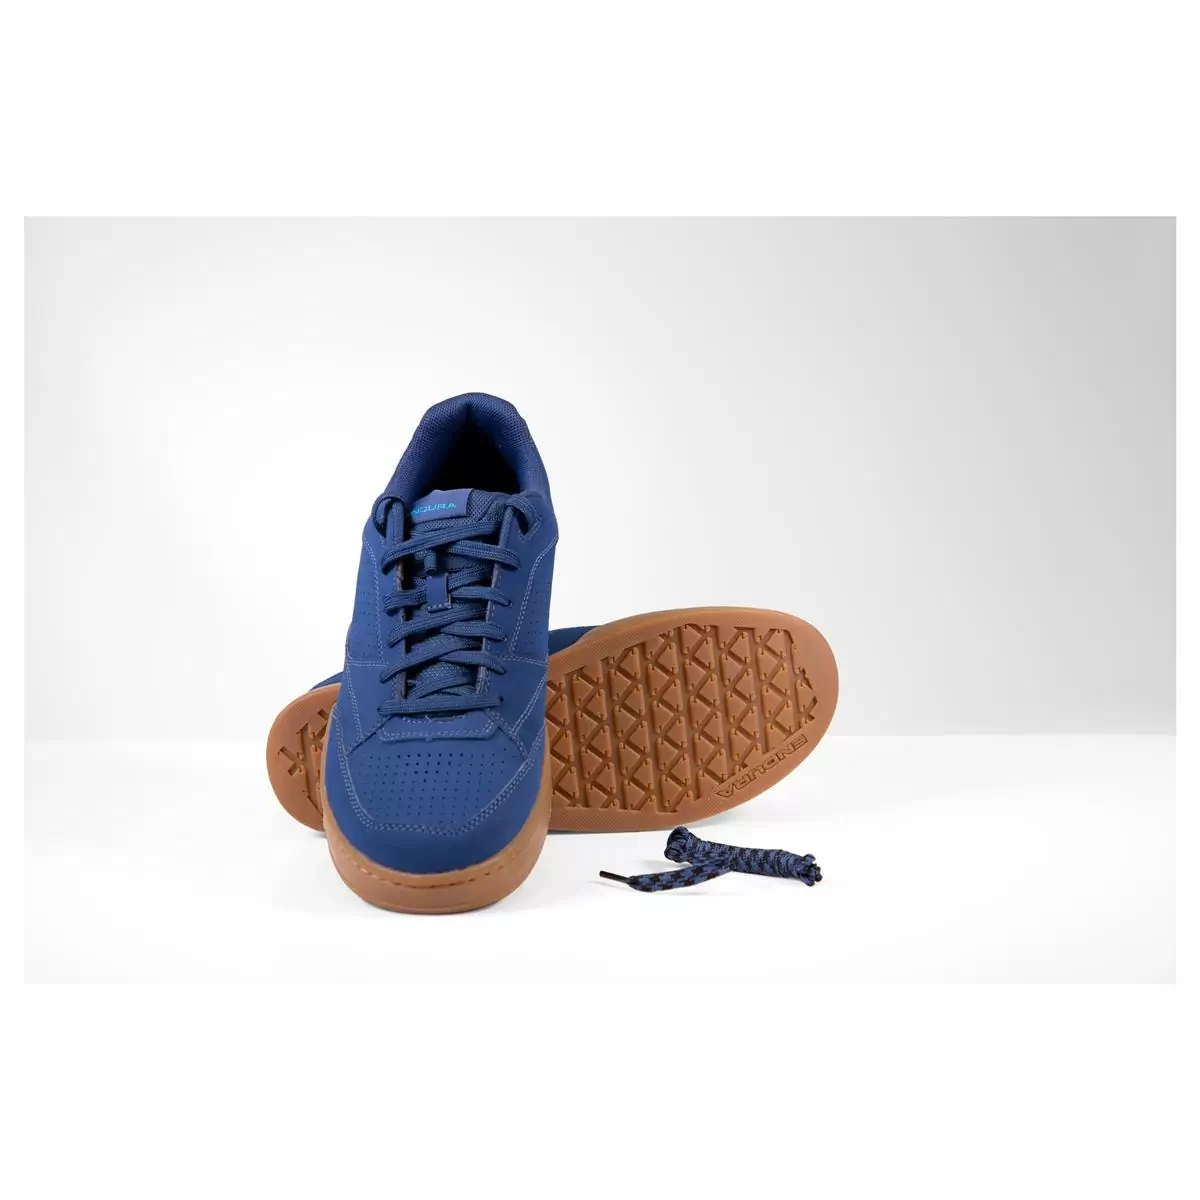 Hummvee Flat Pedal Shoes Blue Size 41 #3